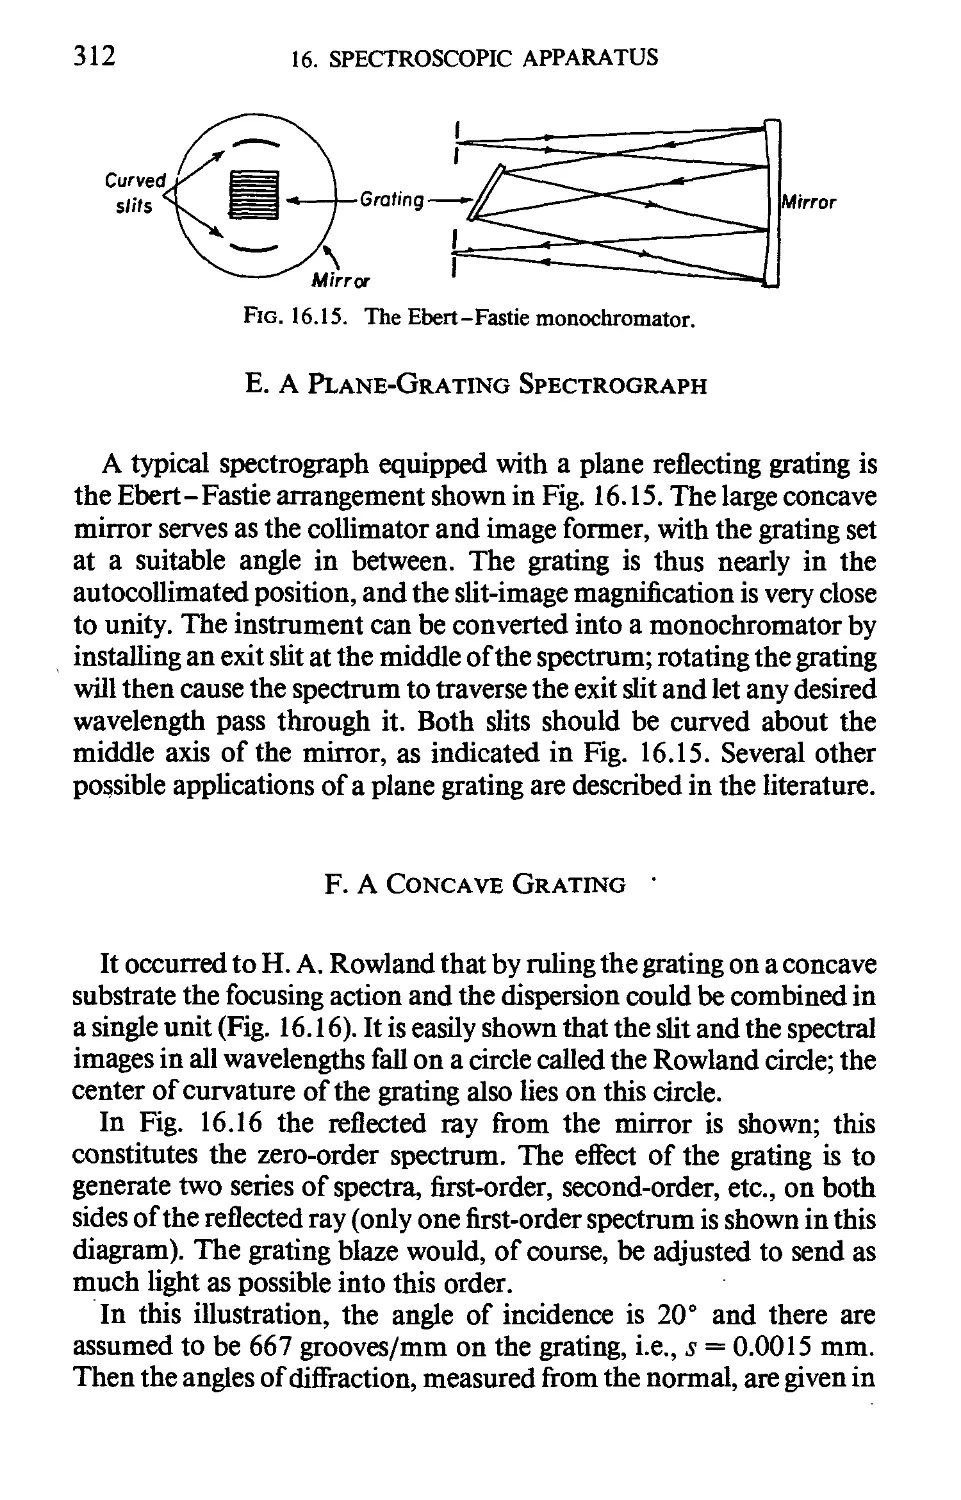 E. A Plane-Grating Spectrograph
F. A Concave Grating